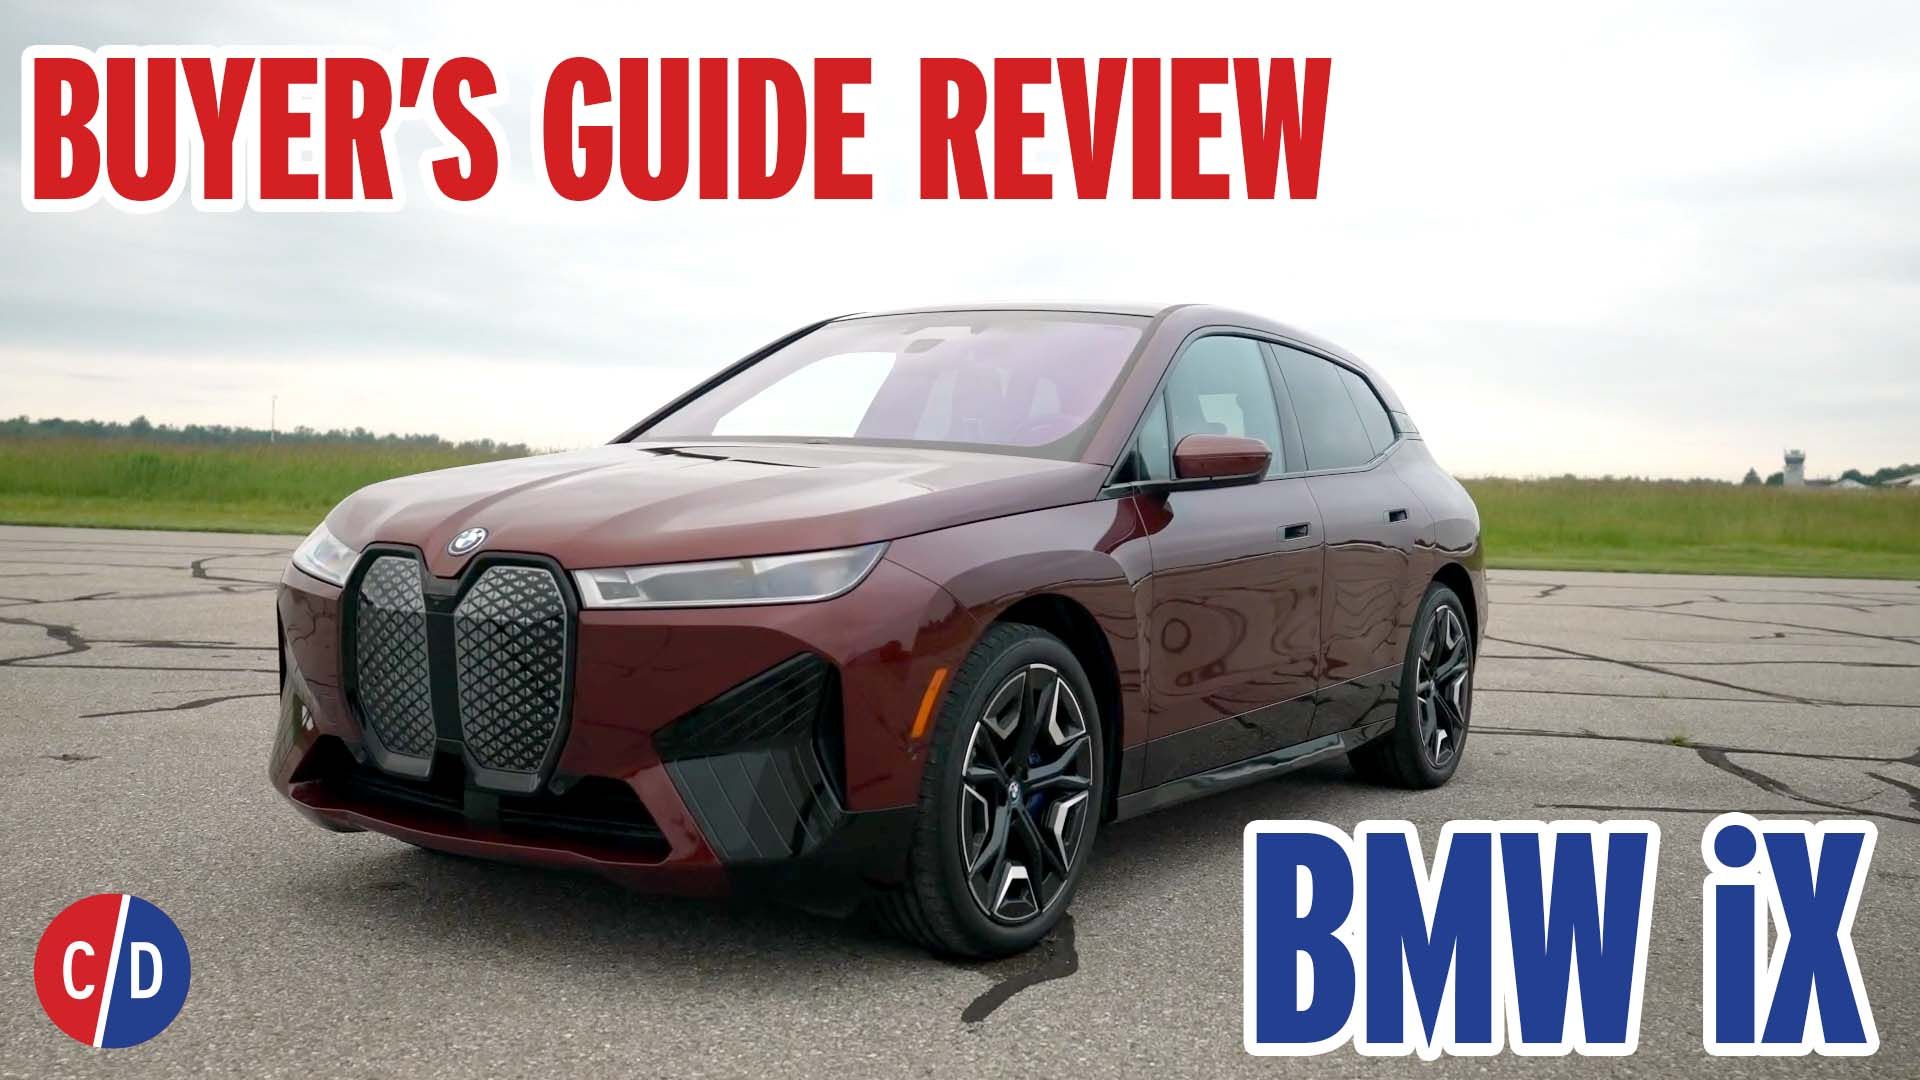 BMW iX Review: A classy EV with great infotainment